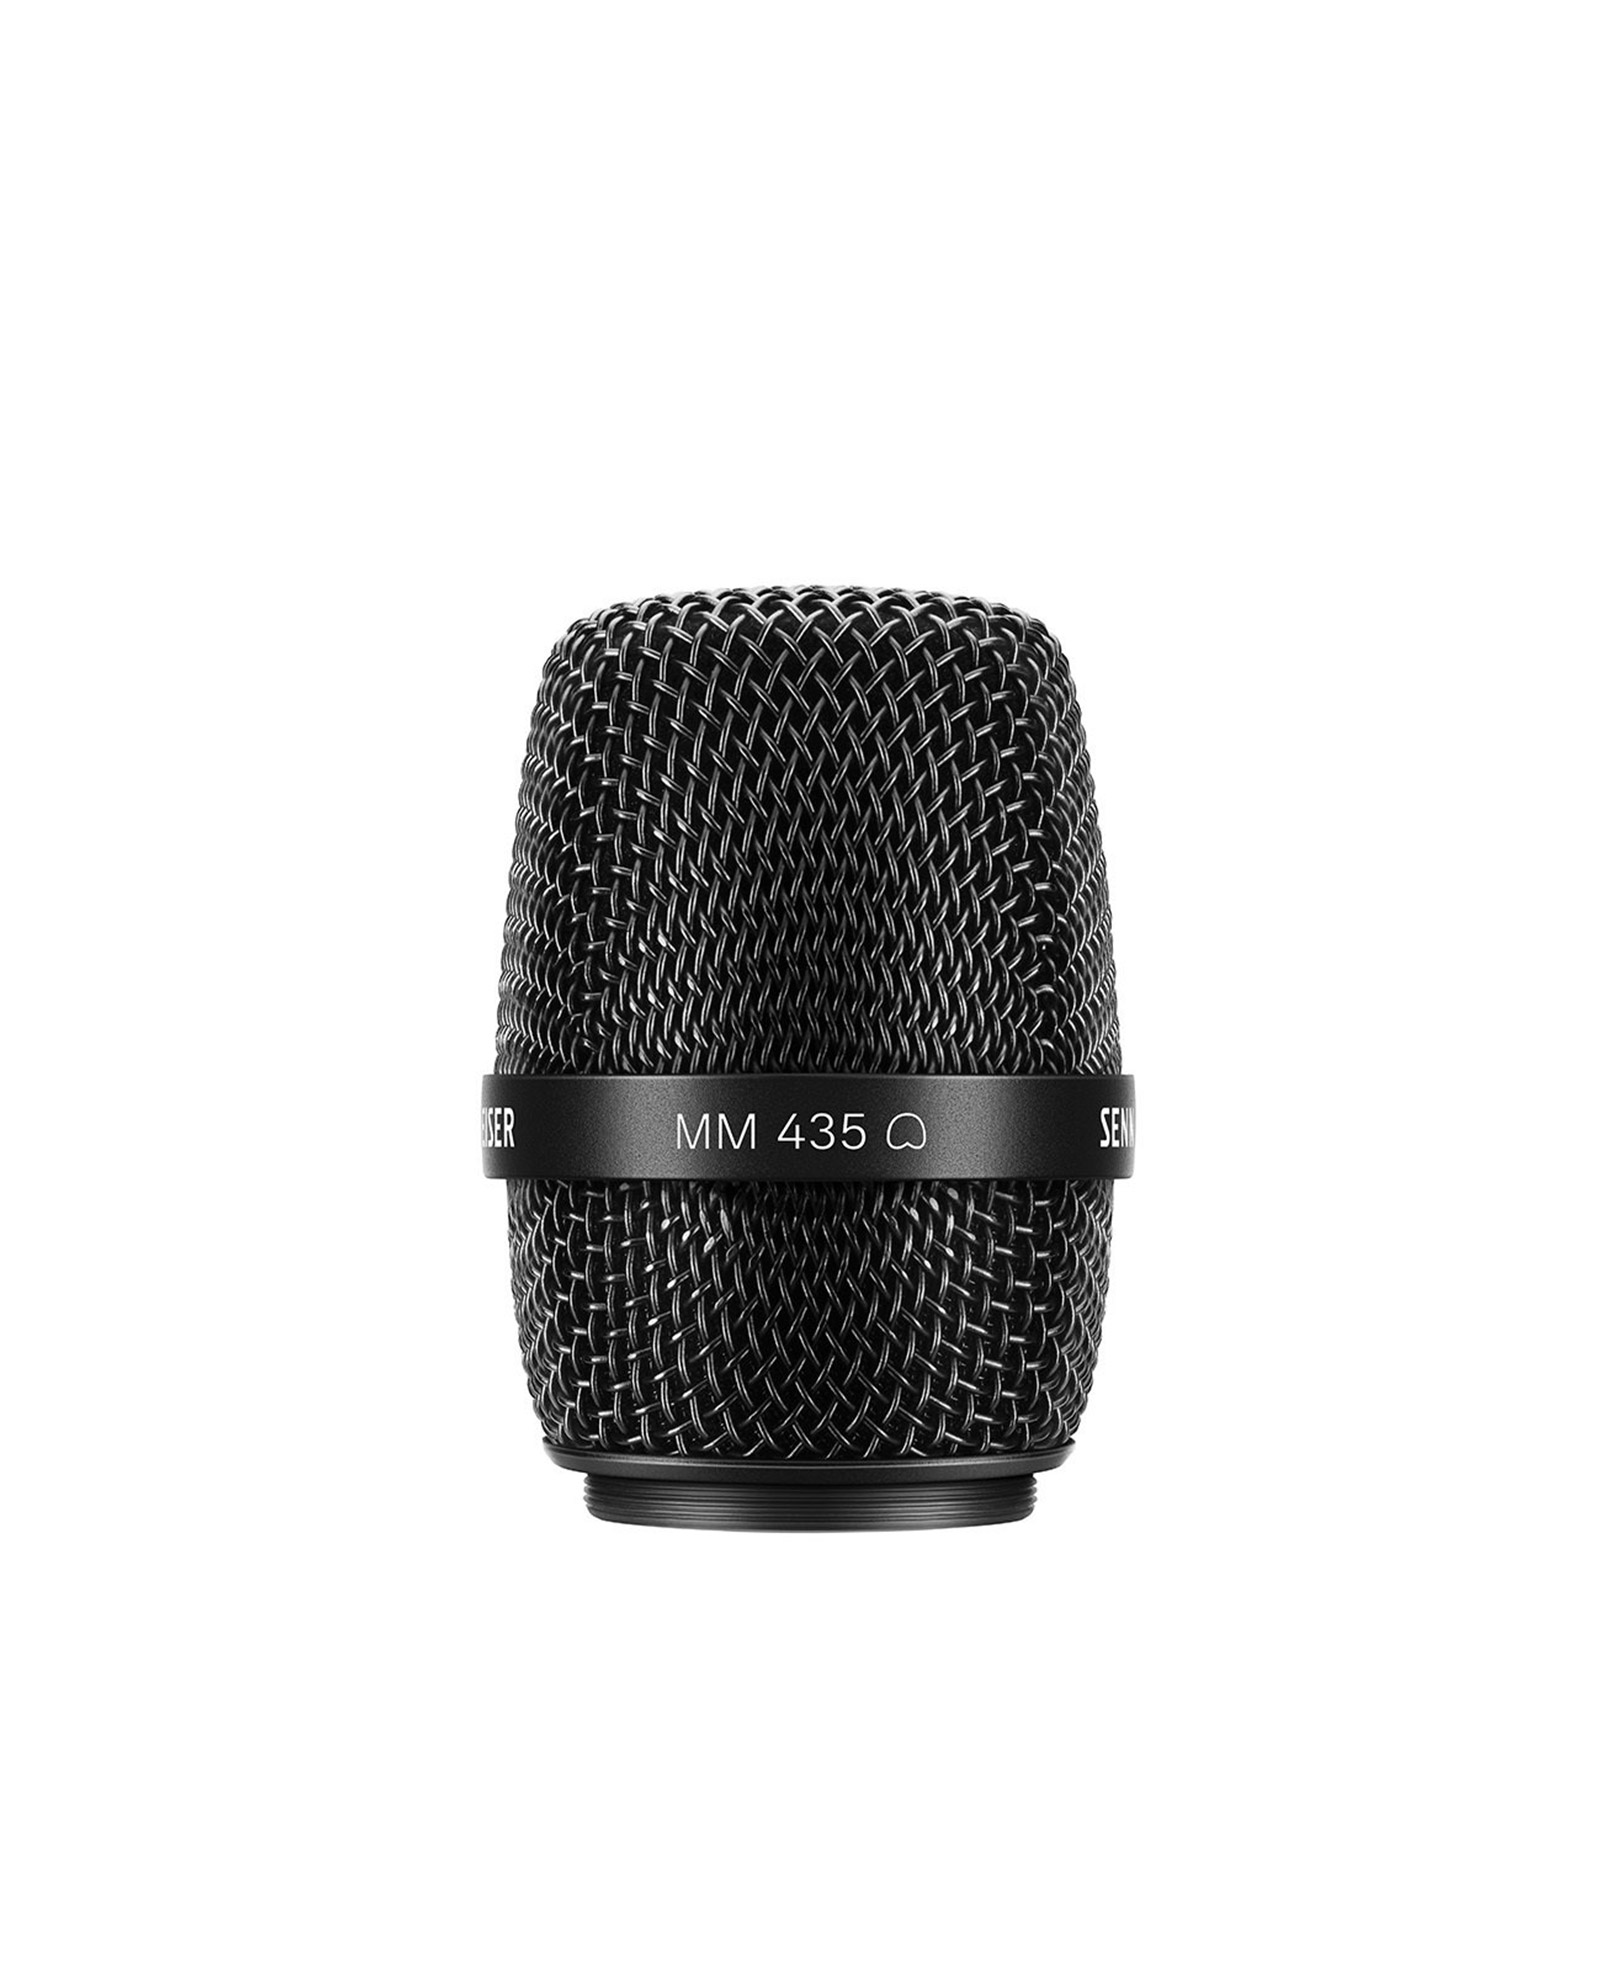 Sennheiser Mm435 Dynamic Microphone Capsule 1